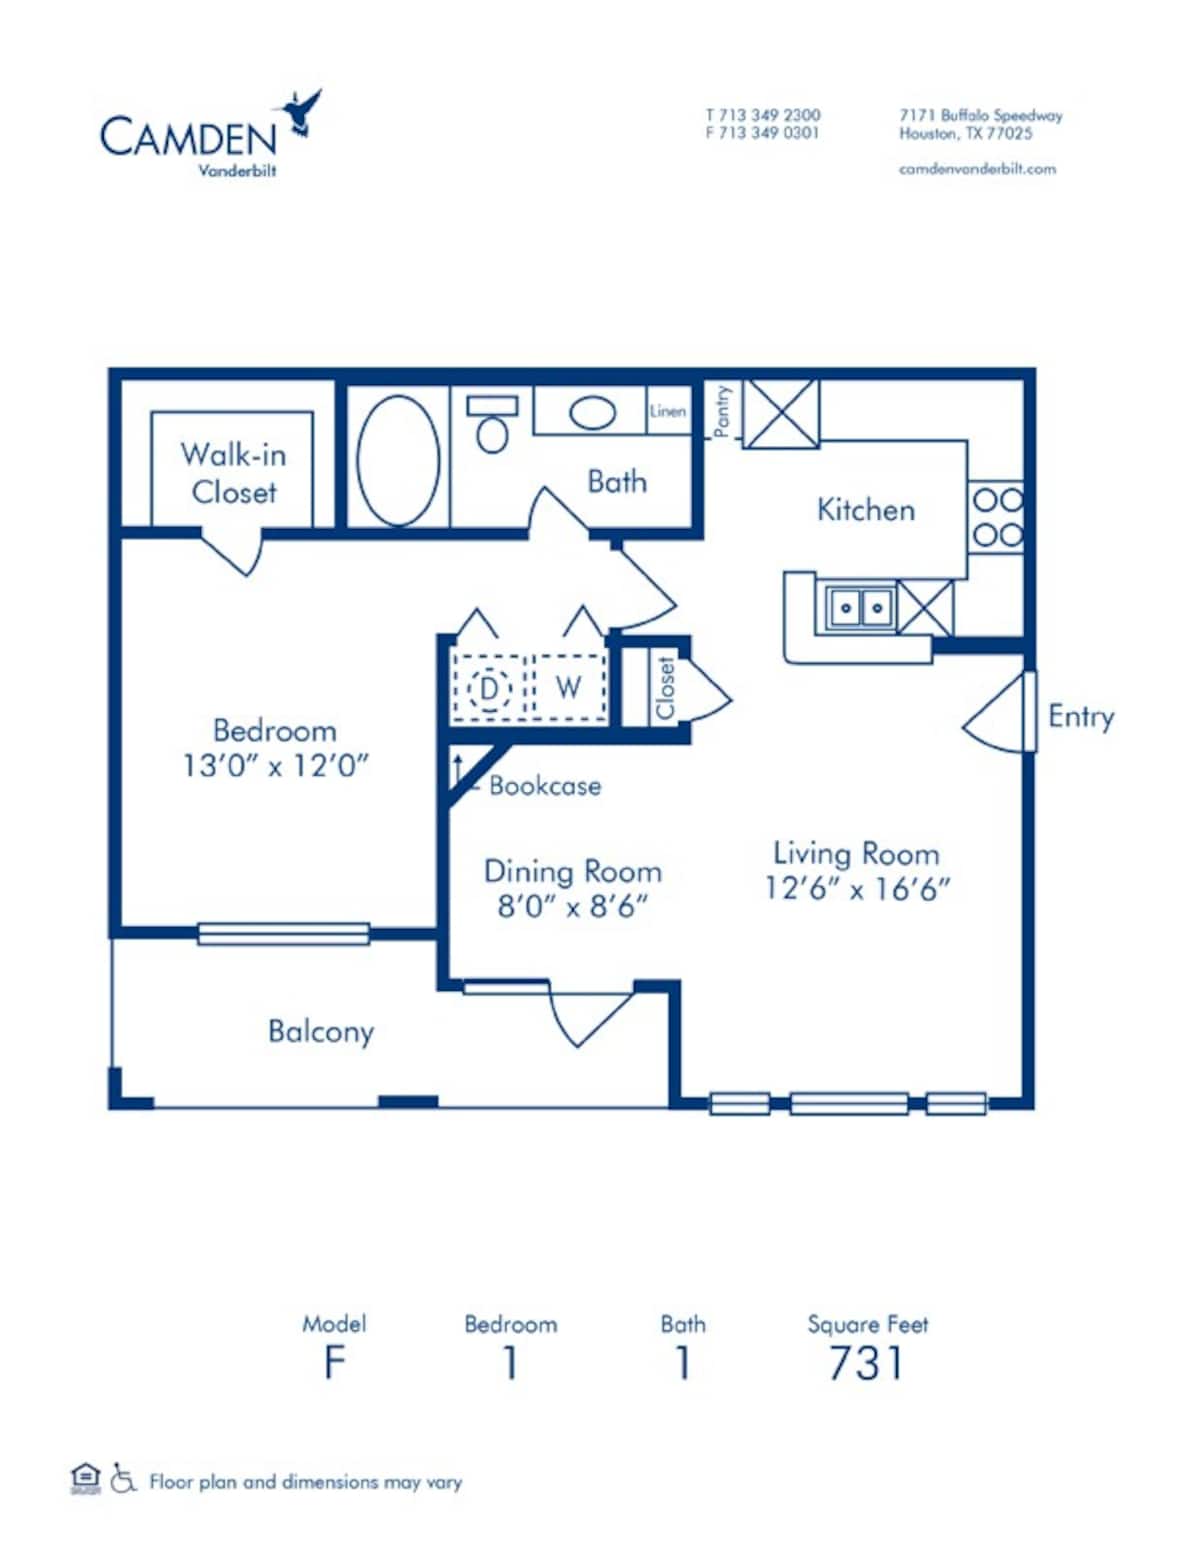 Floorplan diagram for F, showing 1 bedroom